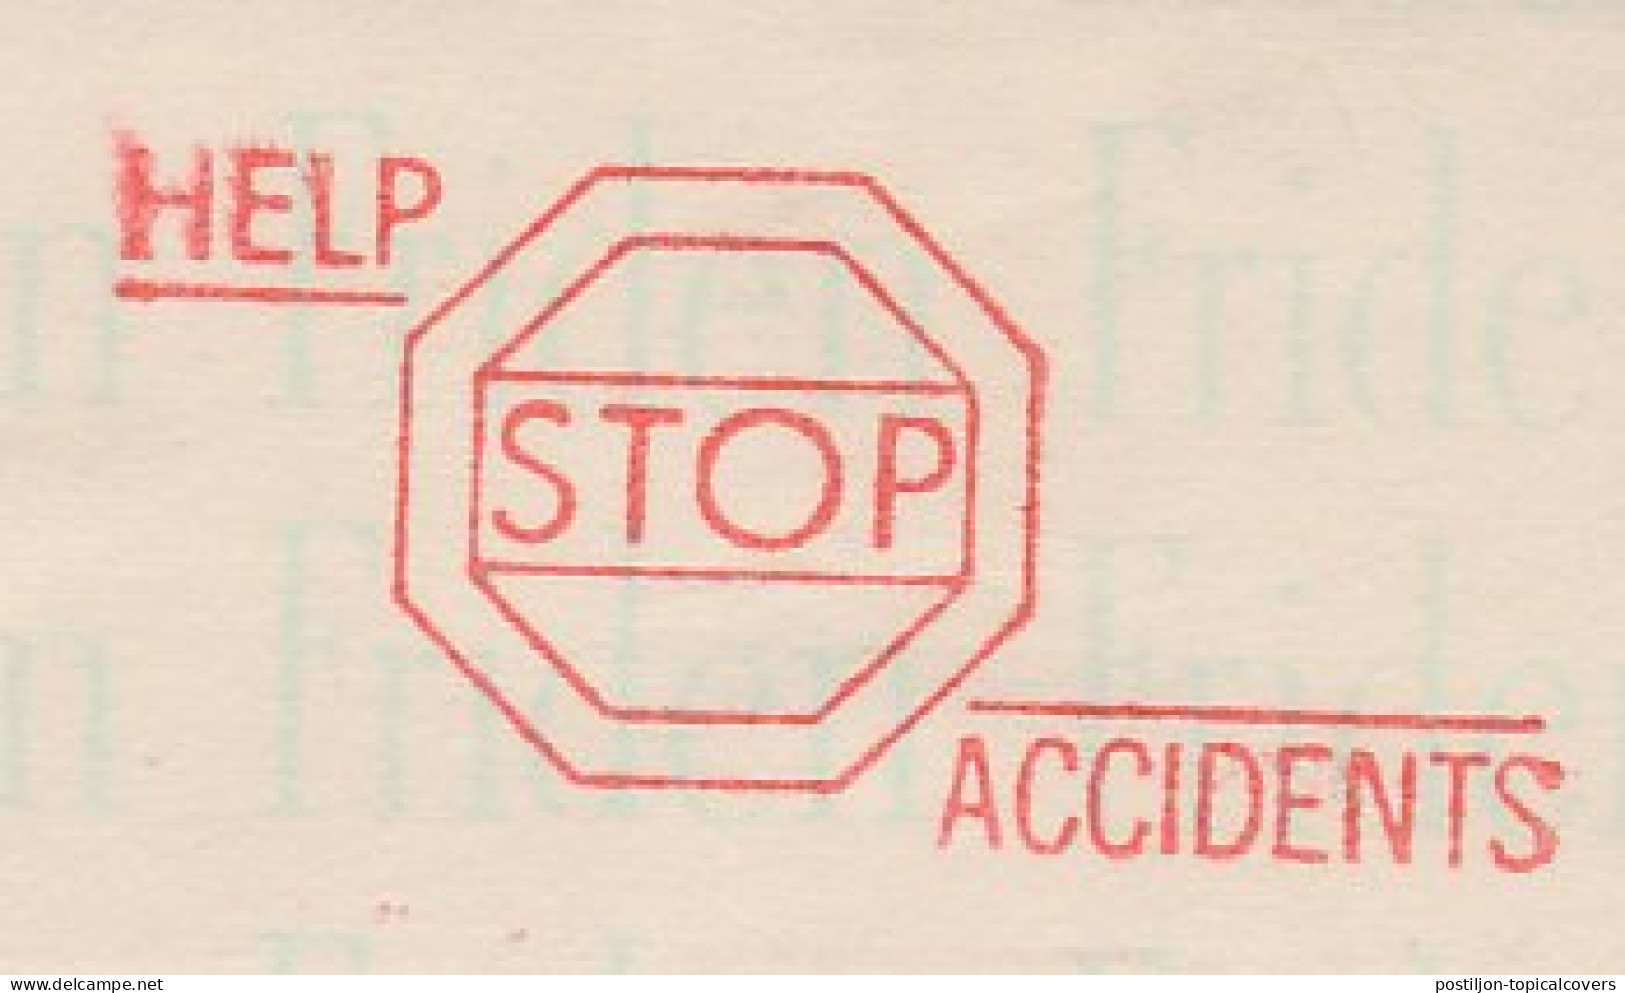 Meter Cut USA 1964 Traffic Safety - Help Stop Accidents - Autres & Non Classés